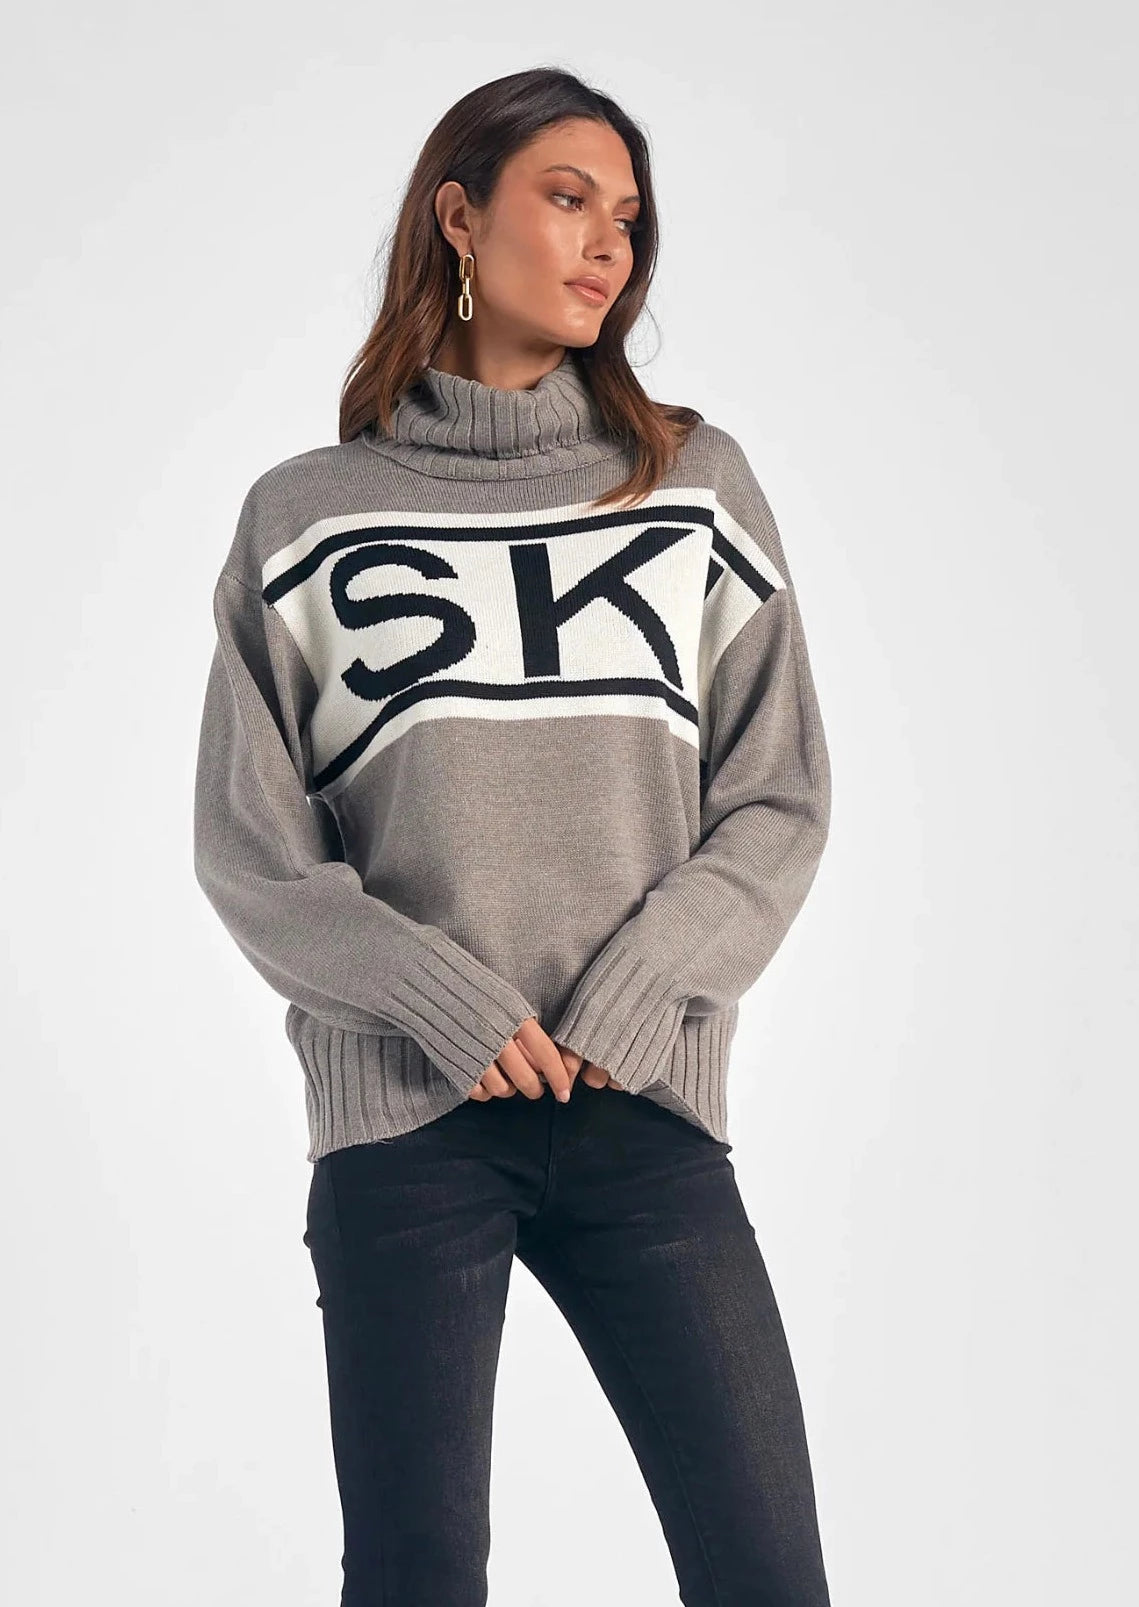 Aspen Ski Sweater Gray